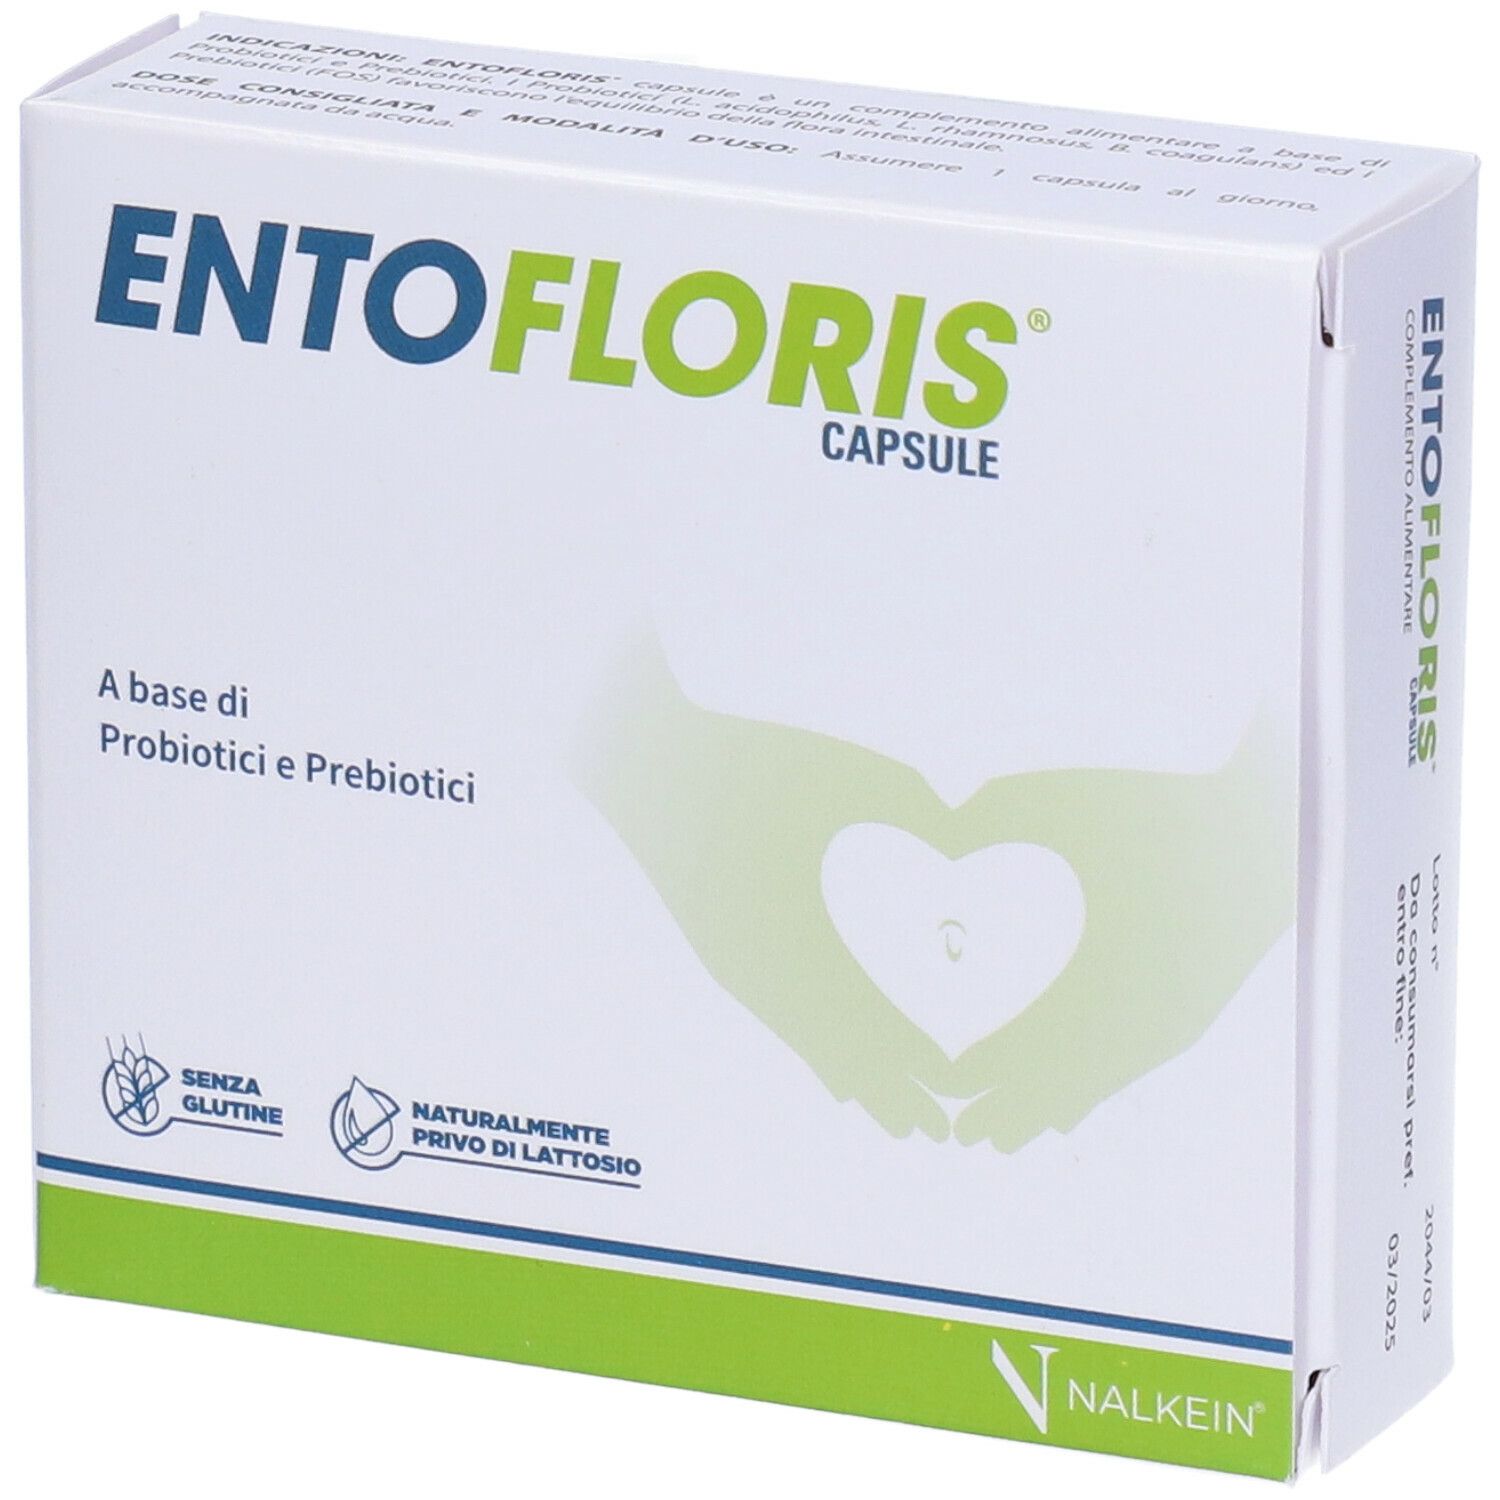 Entofloris® capsule